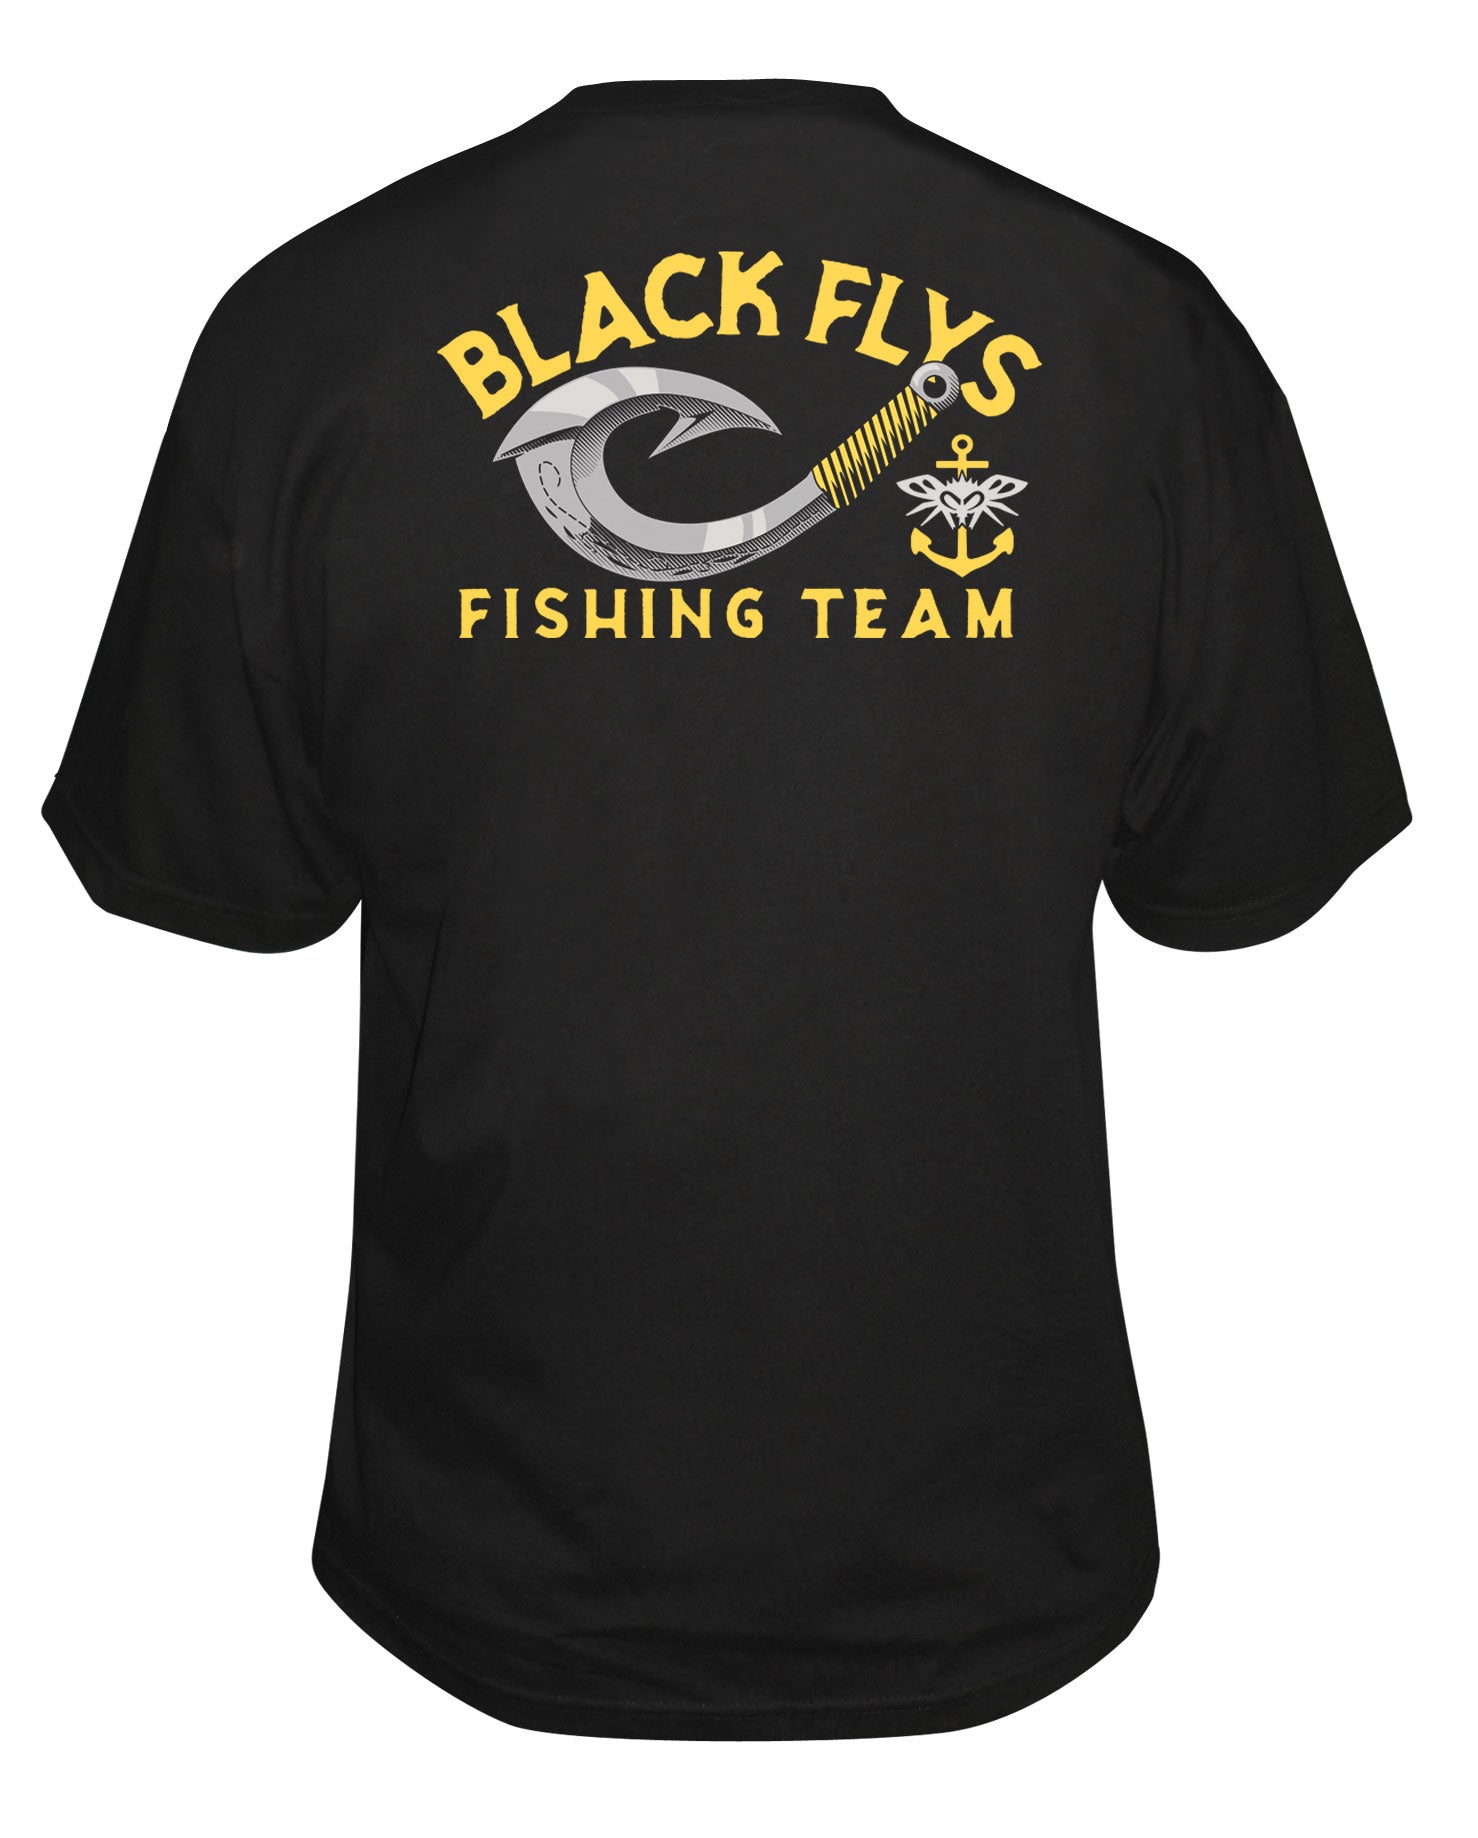 Tahitian Fishing Team Tee - BlackFlys